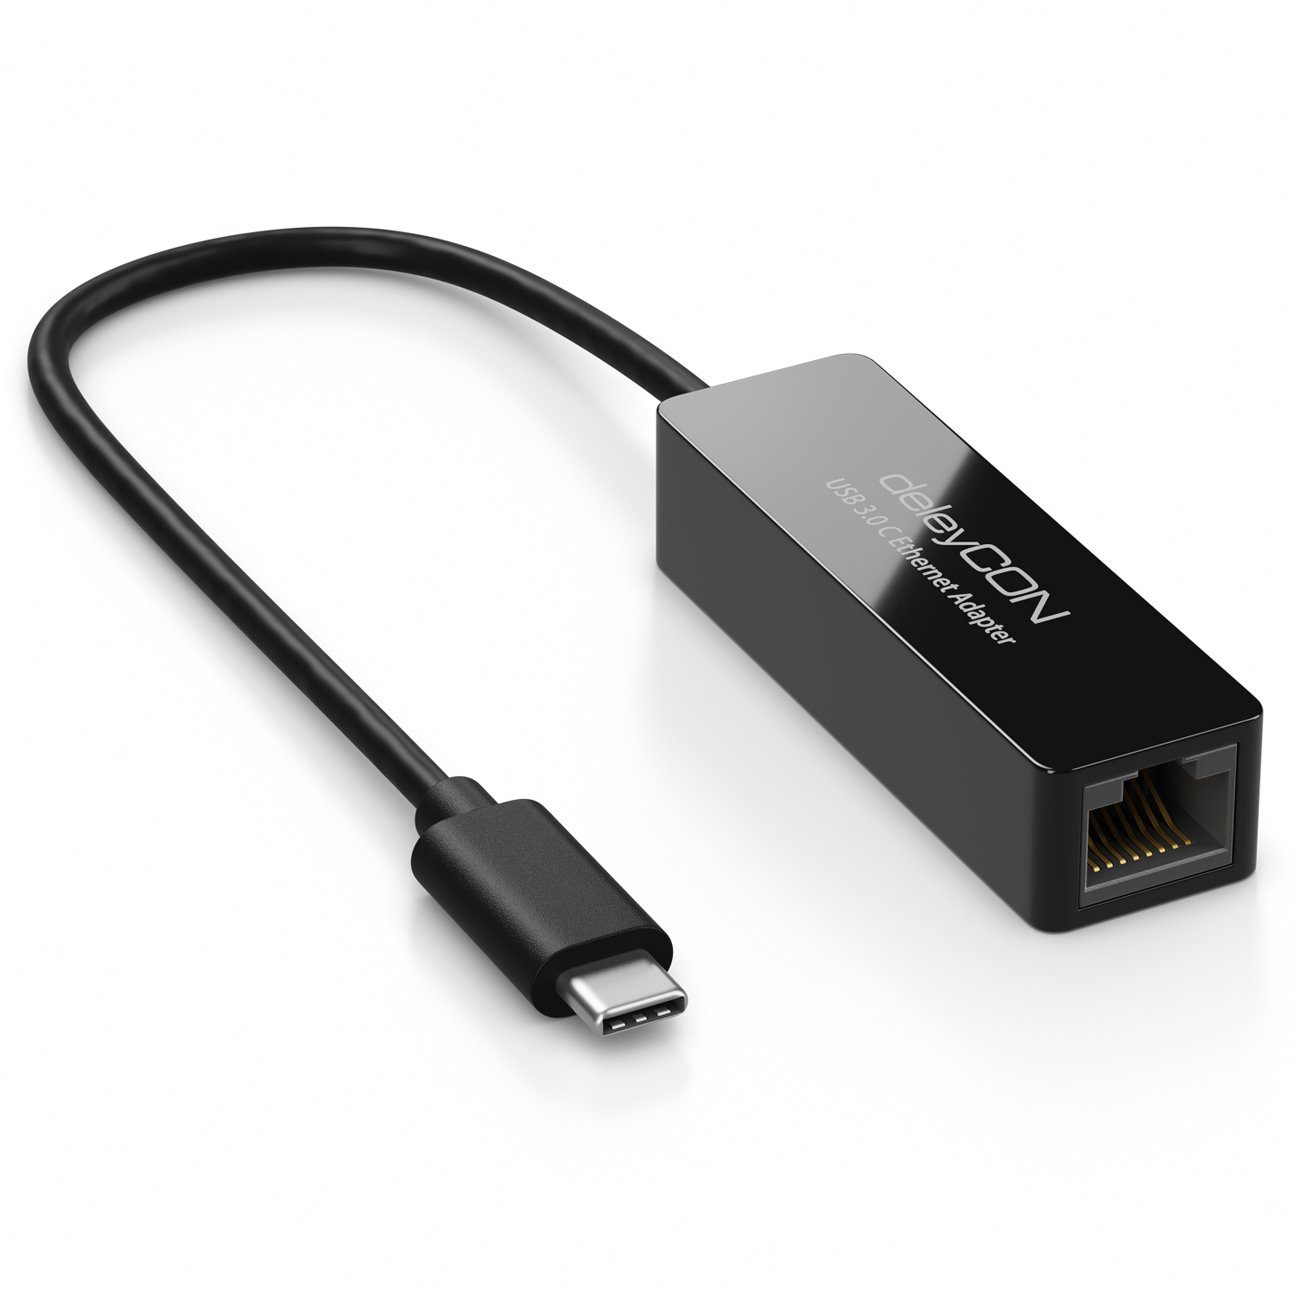 deleyCON deleyCON LAN Adapter USB 3.0 Netzwerkadapter Gigabit USB C auf RJ45 - Netzwerk-Adapter